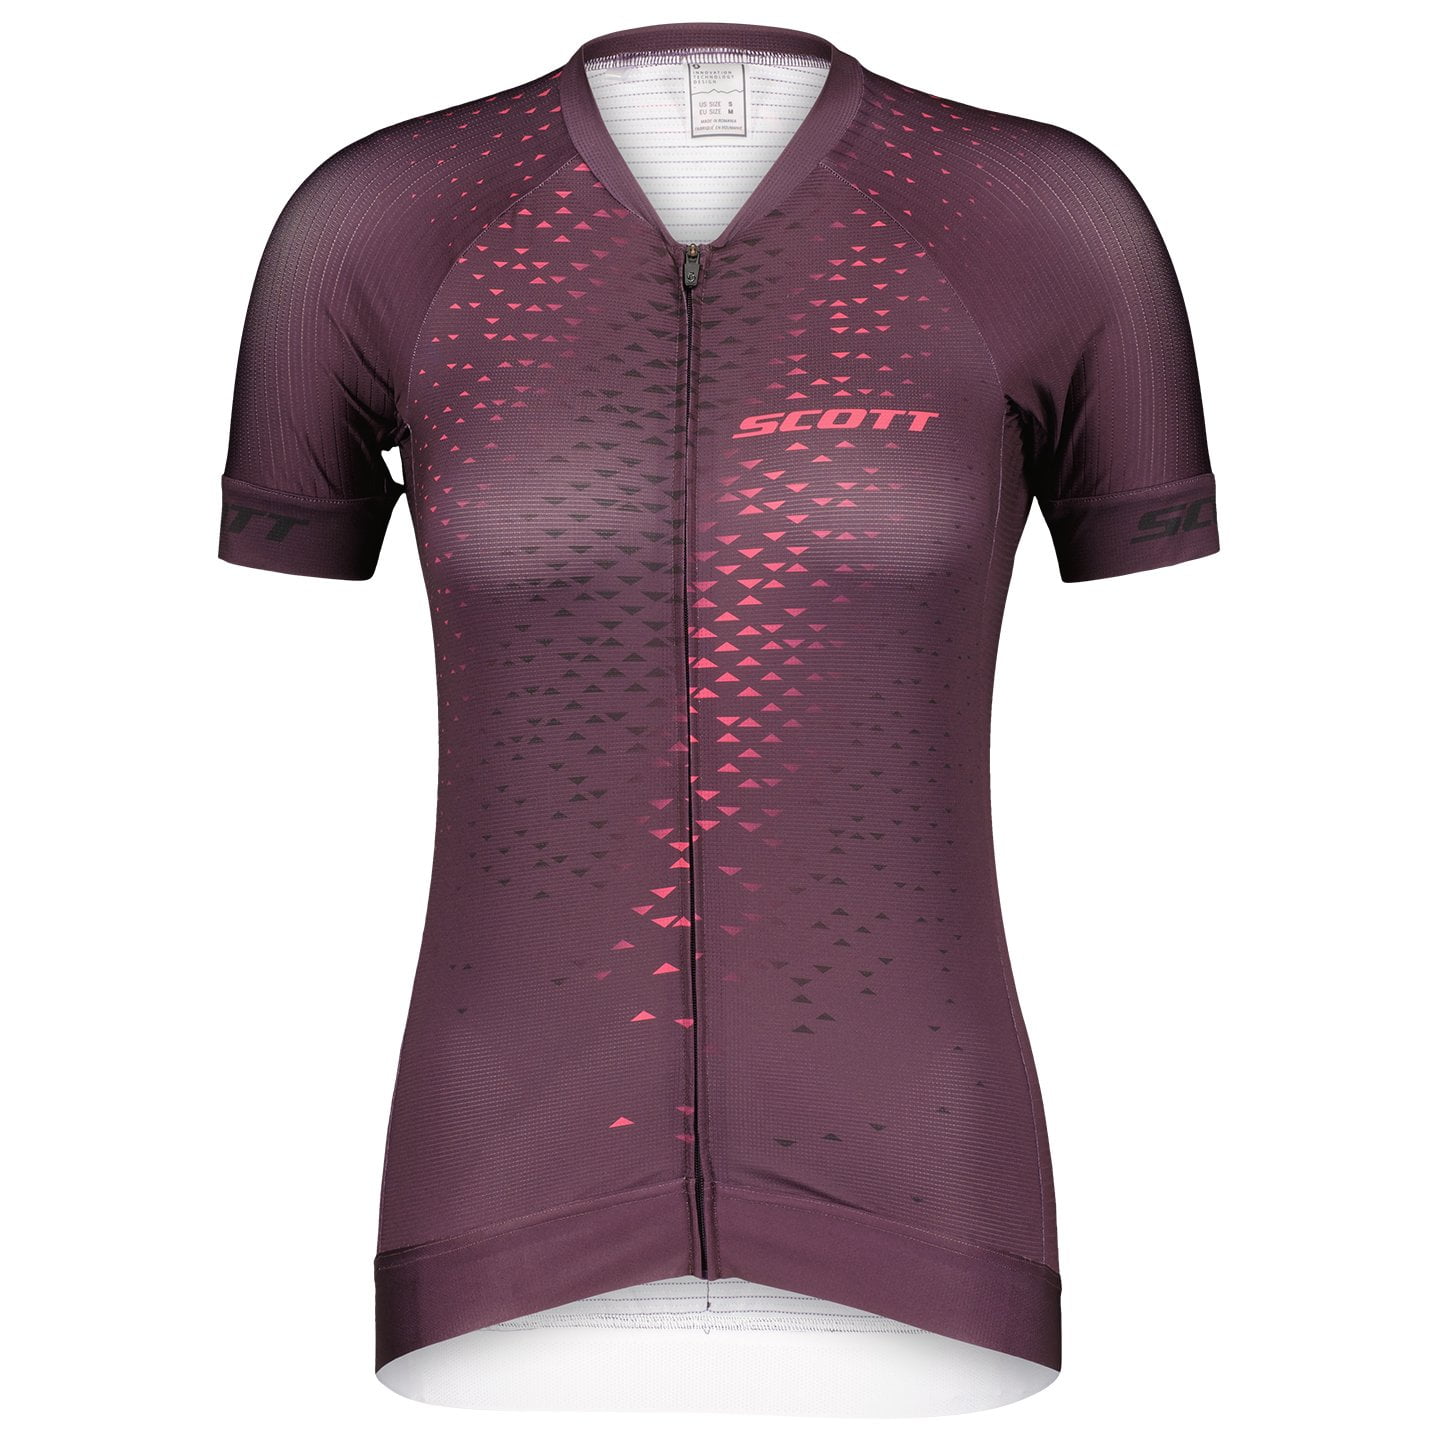 SCOTT RC Pro Women’s Jersey Women’s Short Sleeve Jersey, size M, Cycling jersey, Cycle clothing